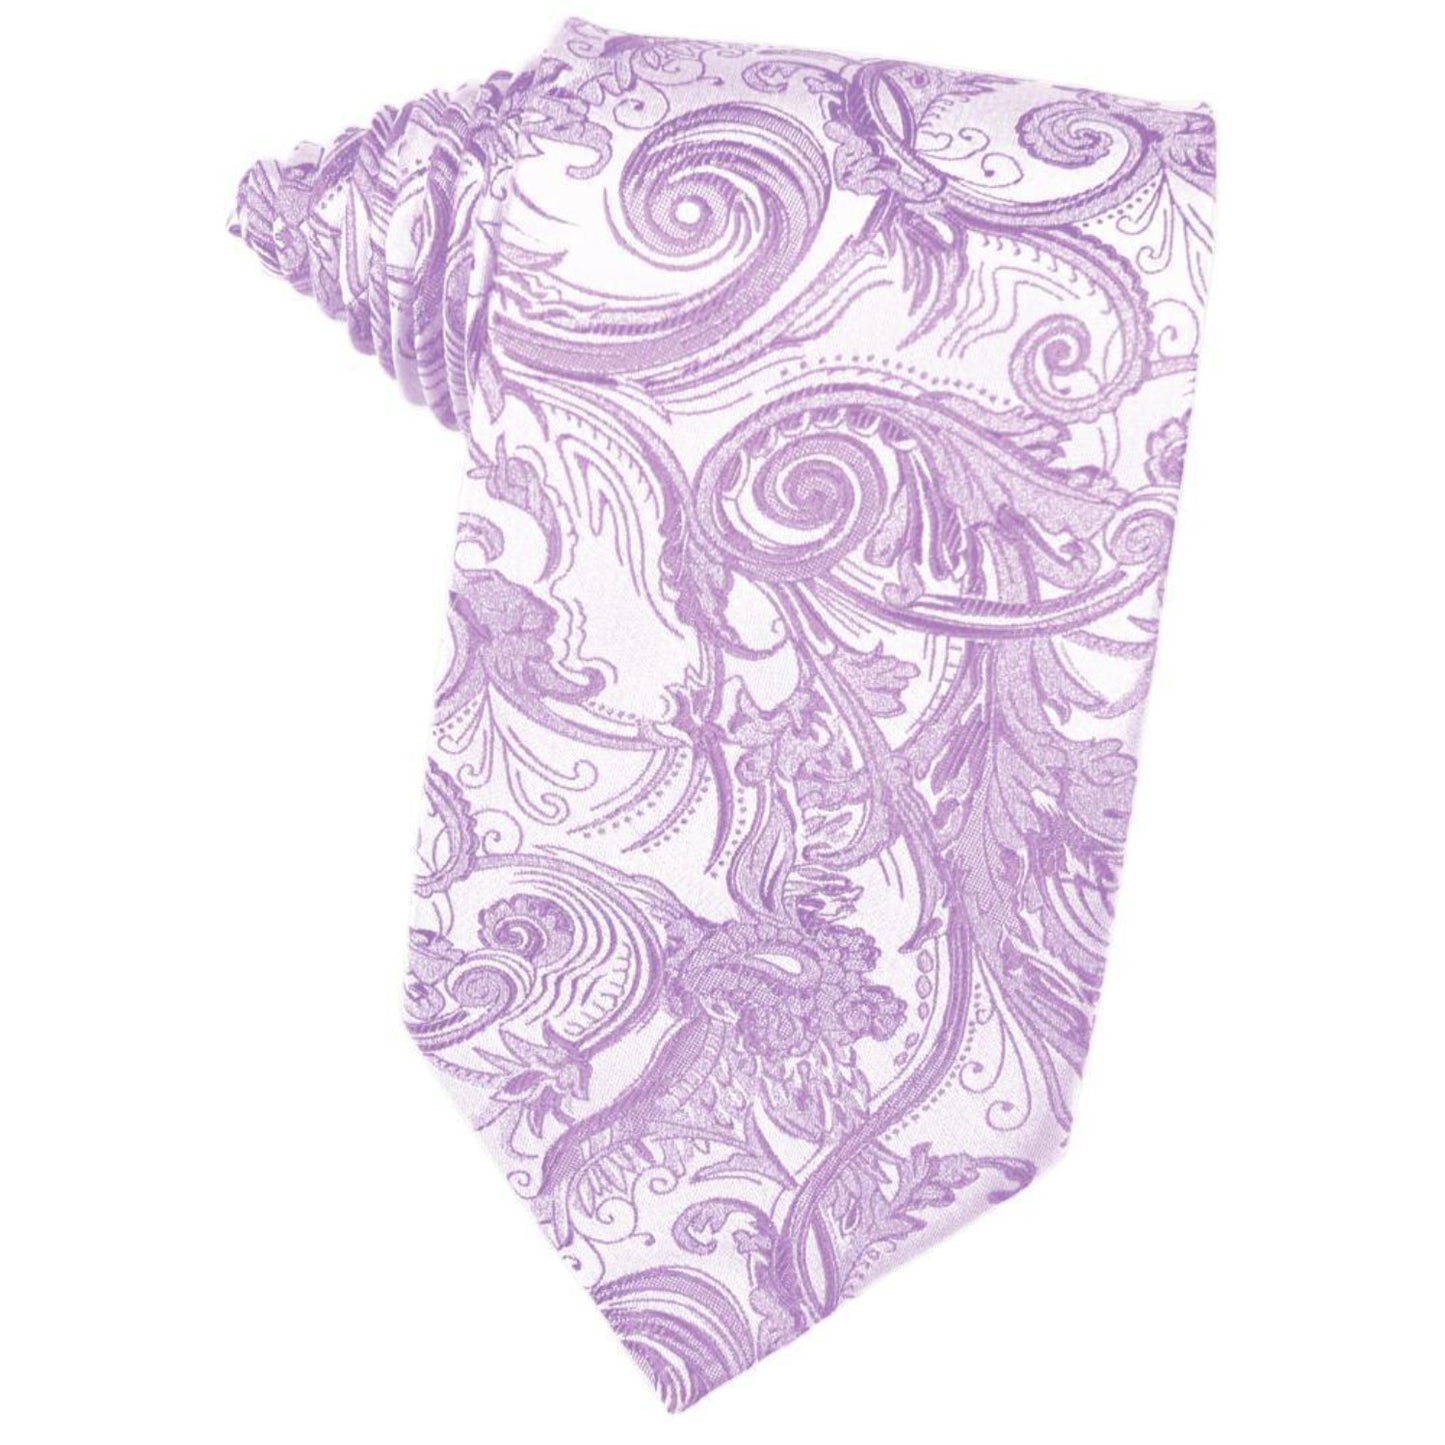 Tapestry Self-Tie Necktie